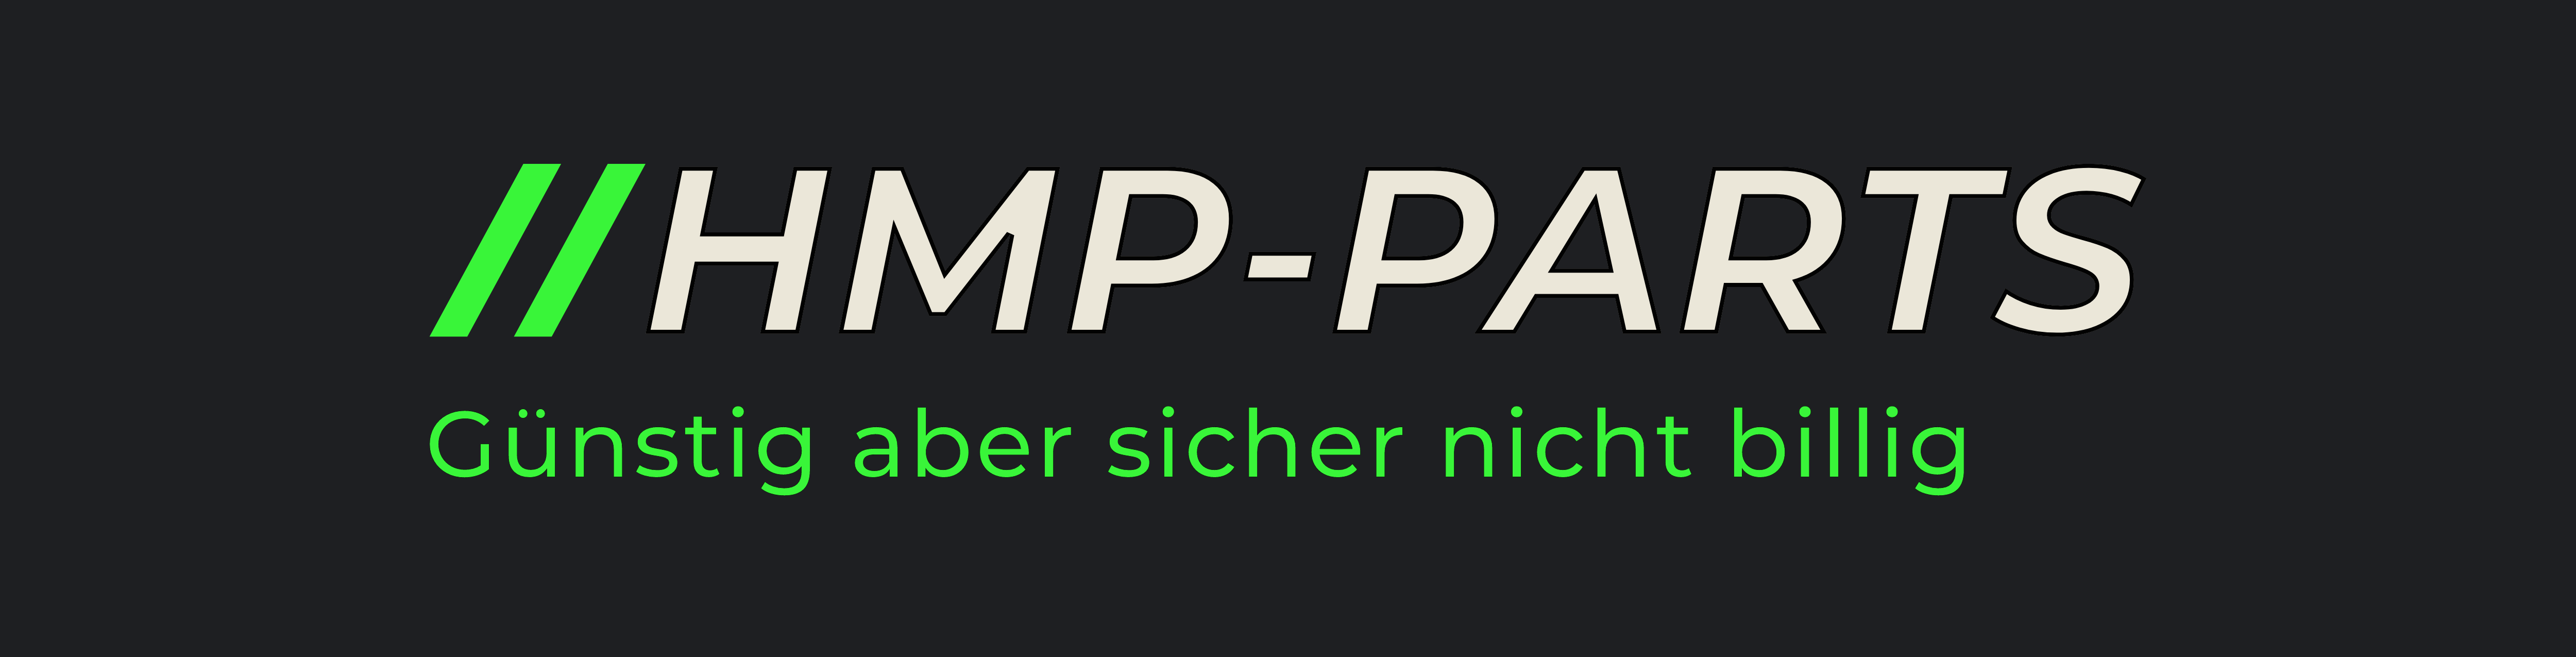 HMP-PARTS Logo